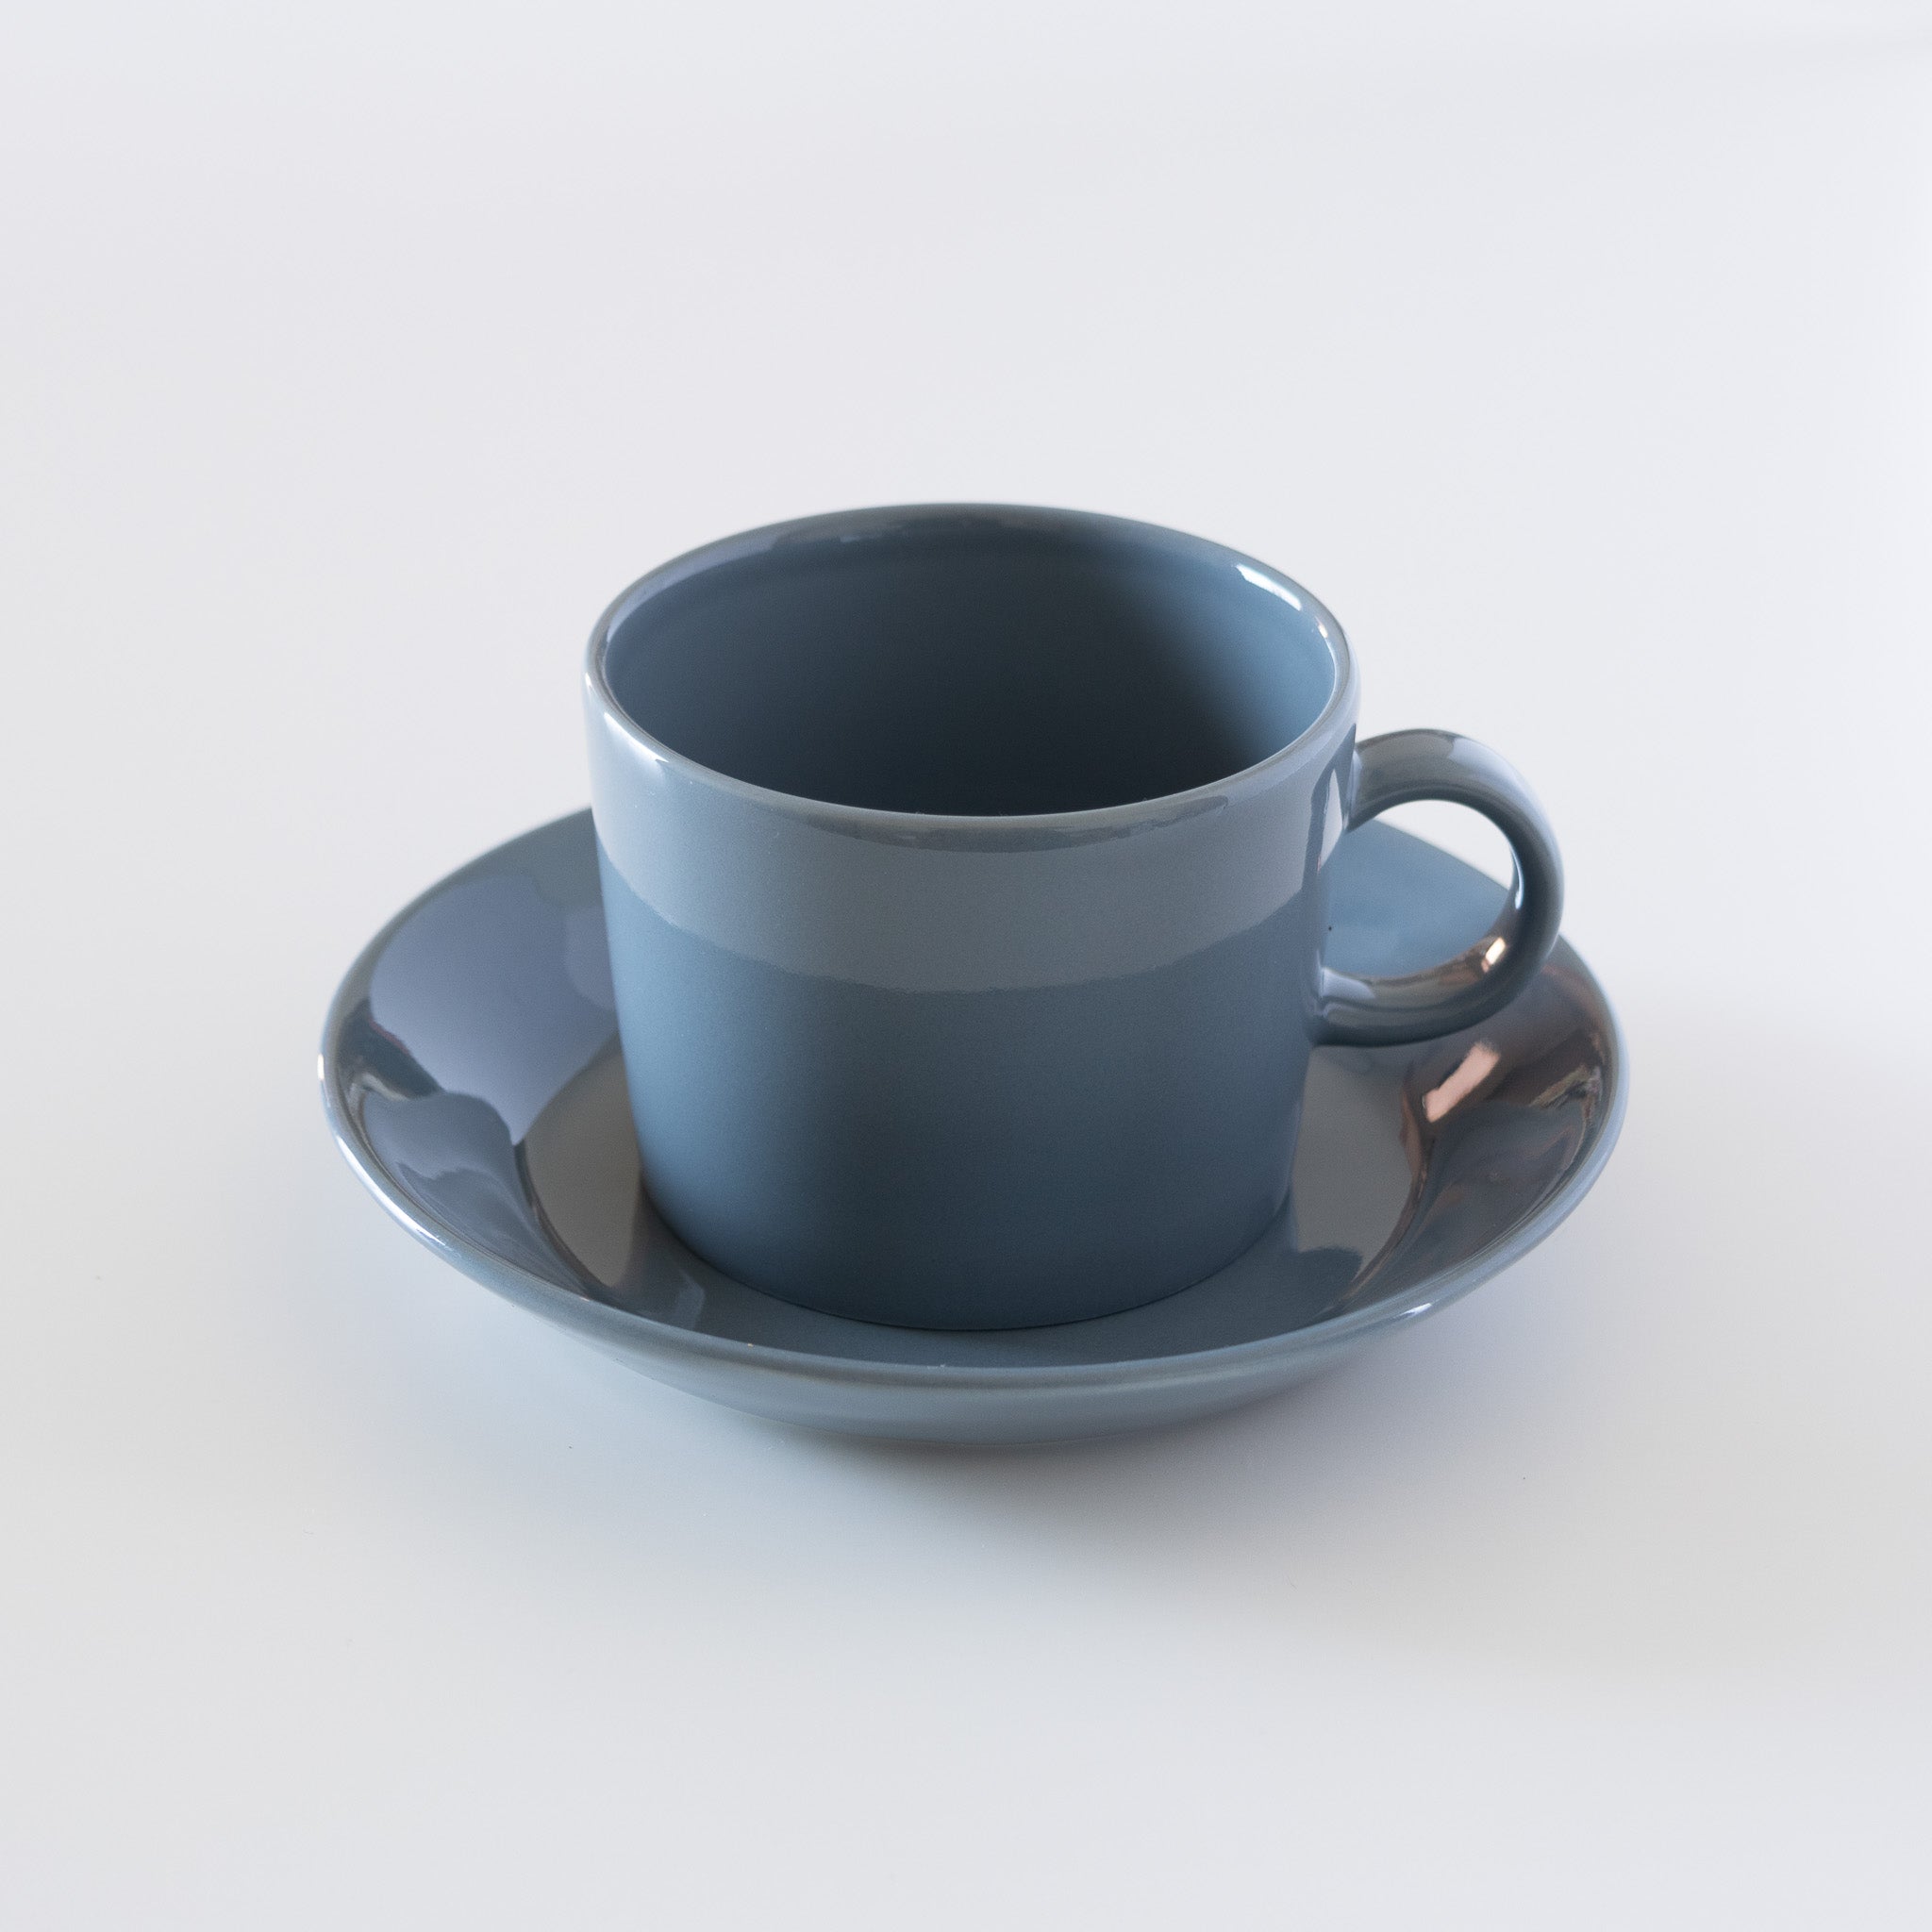 teema (ティーマ) cup & saucer dark grey / arabia (アラビア) – 北欧 